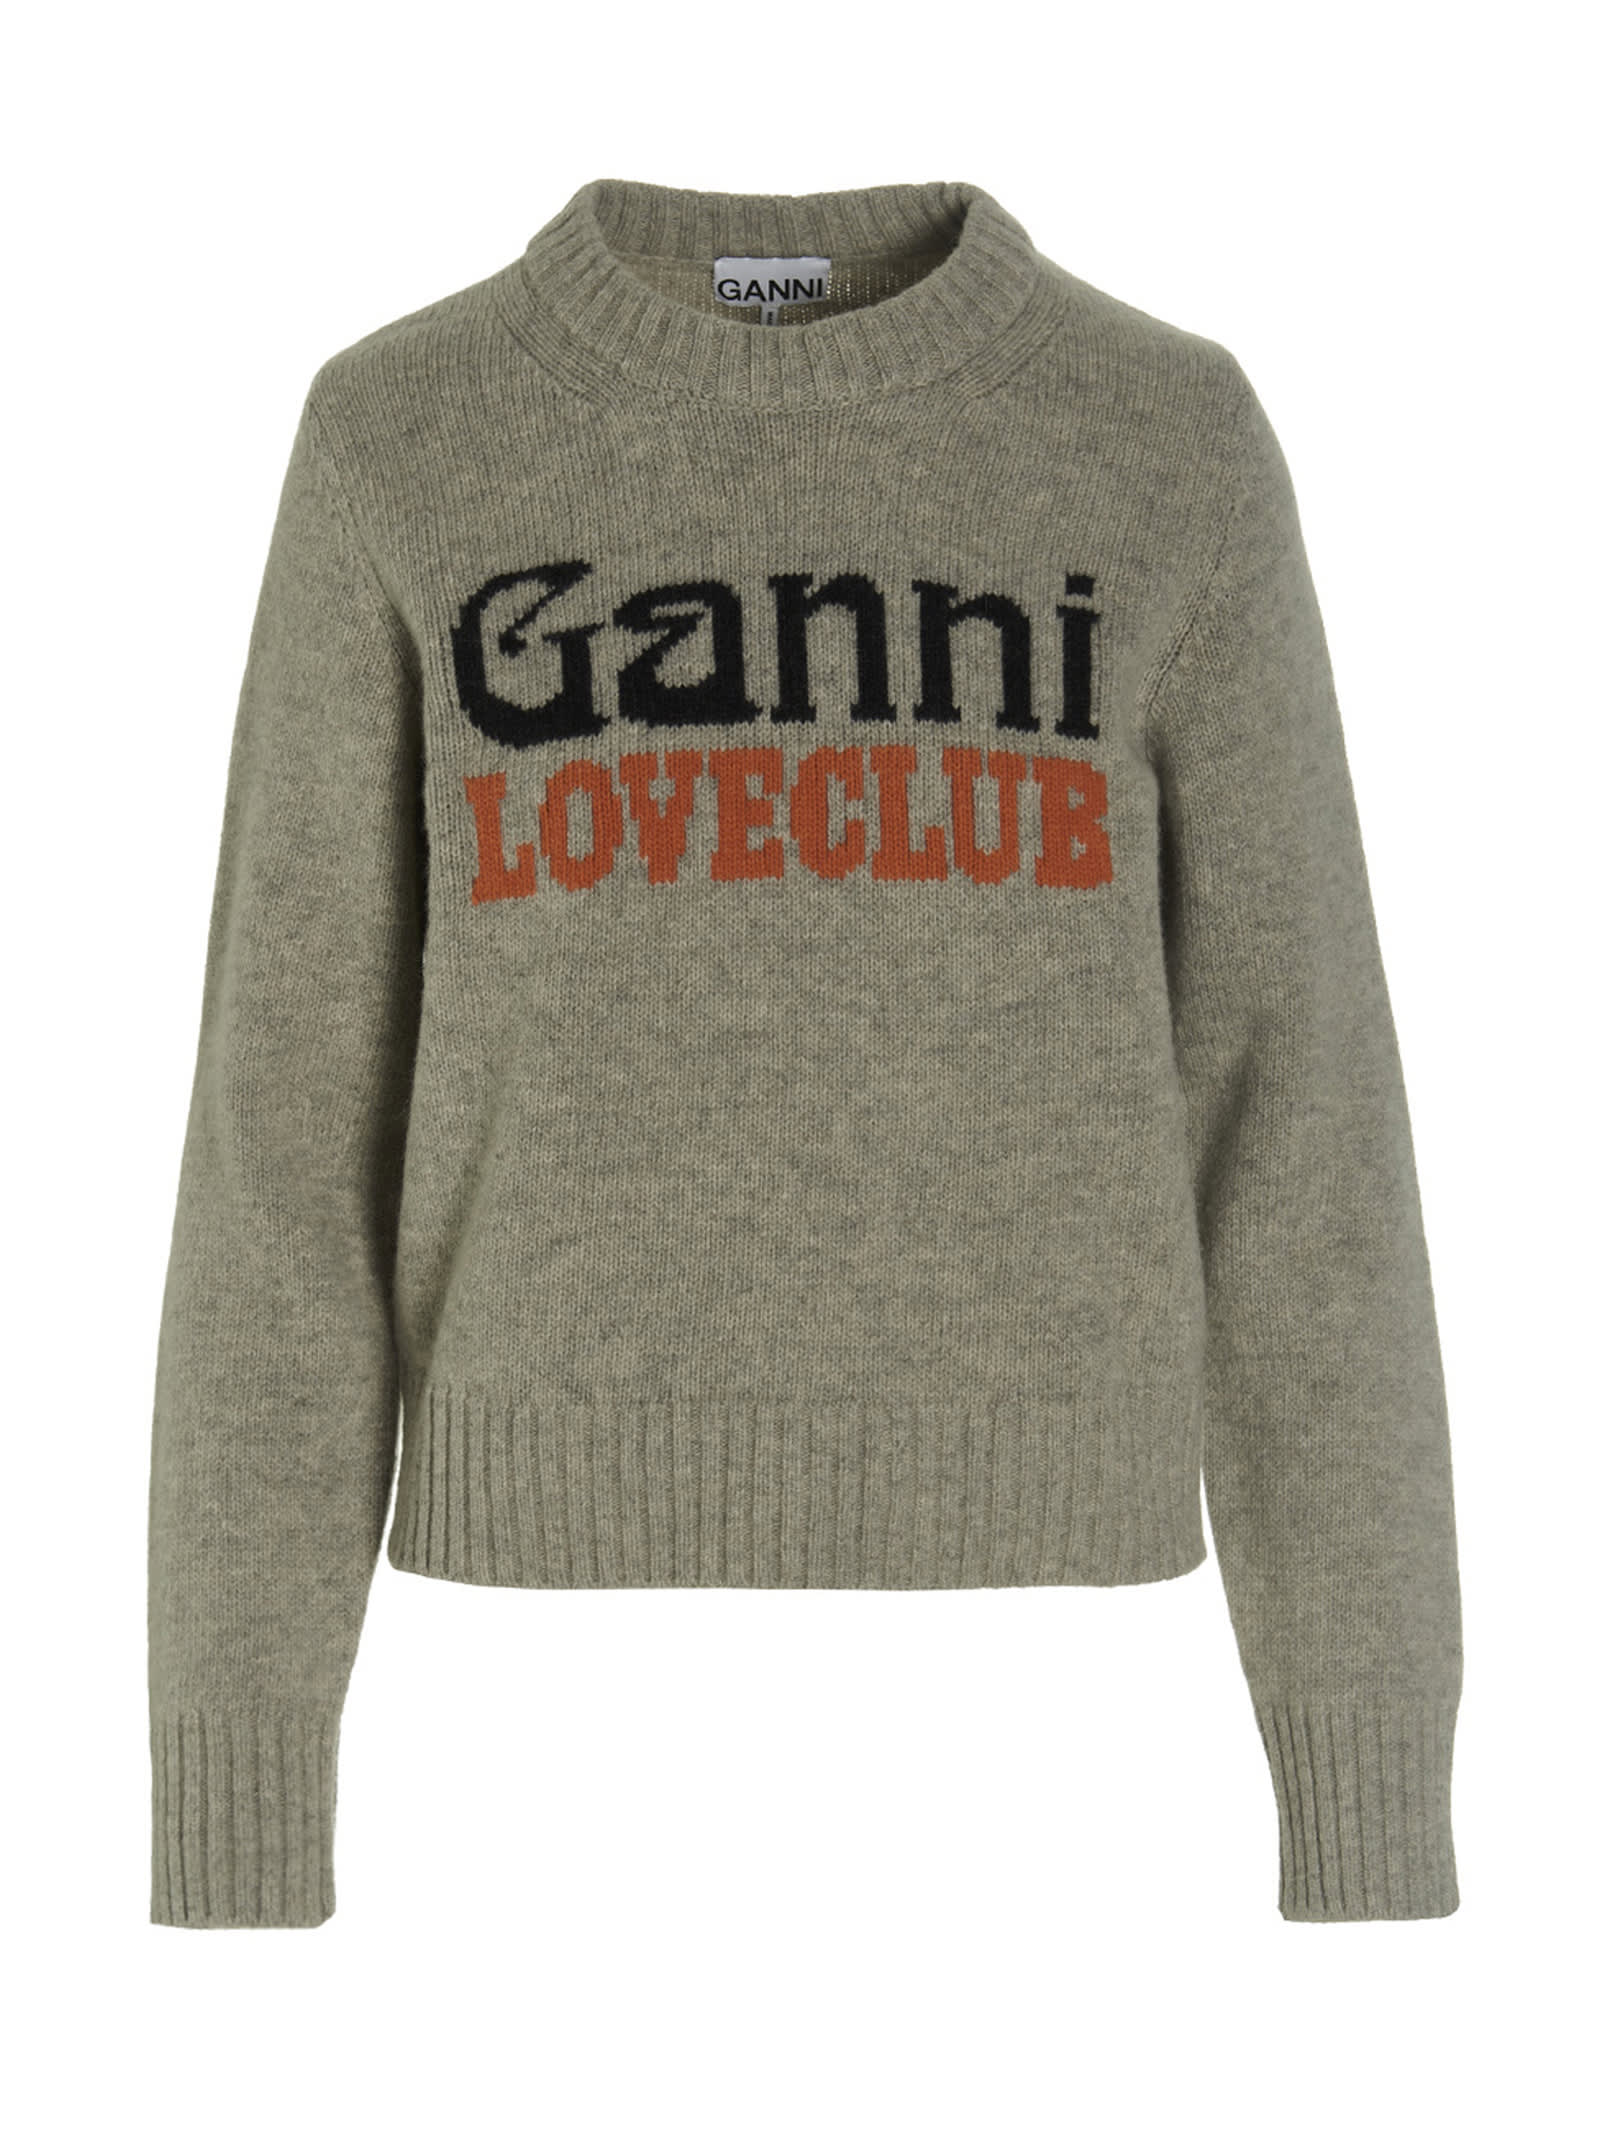 ganni Loveclub Sweater